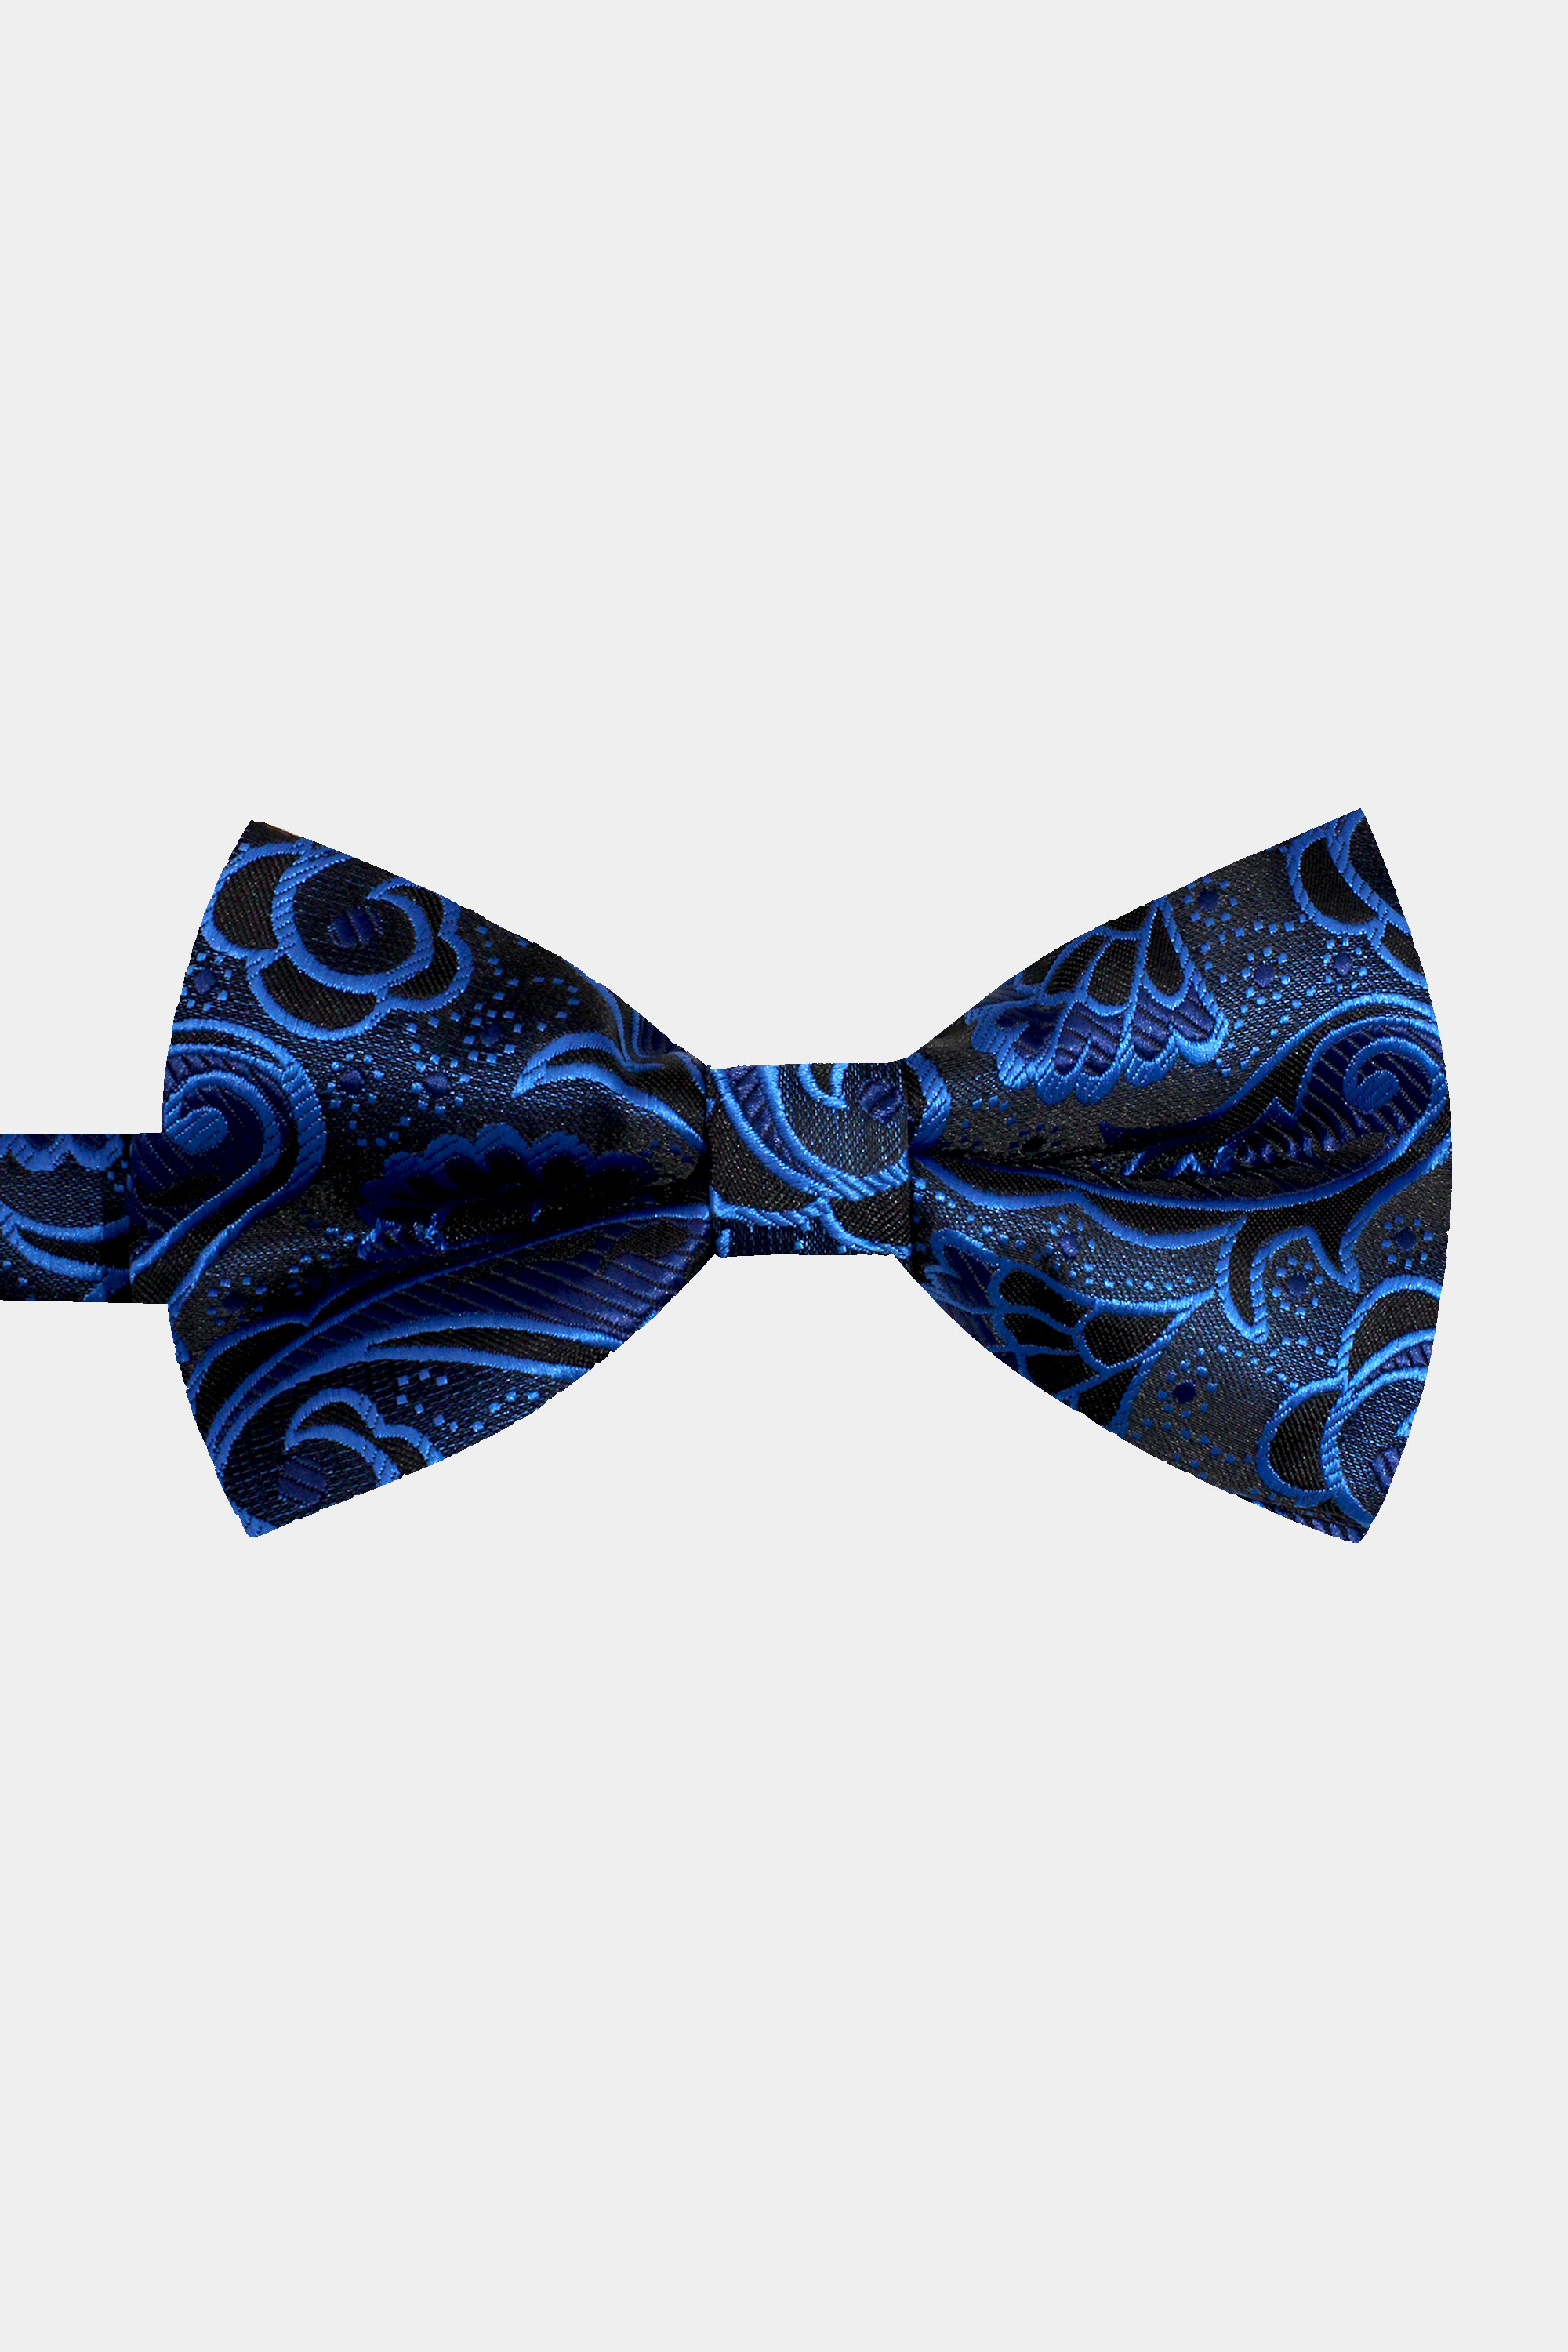 Royal-Blue-Paisley-Bow-Tie-from-Gentlemansguru.com